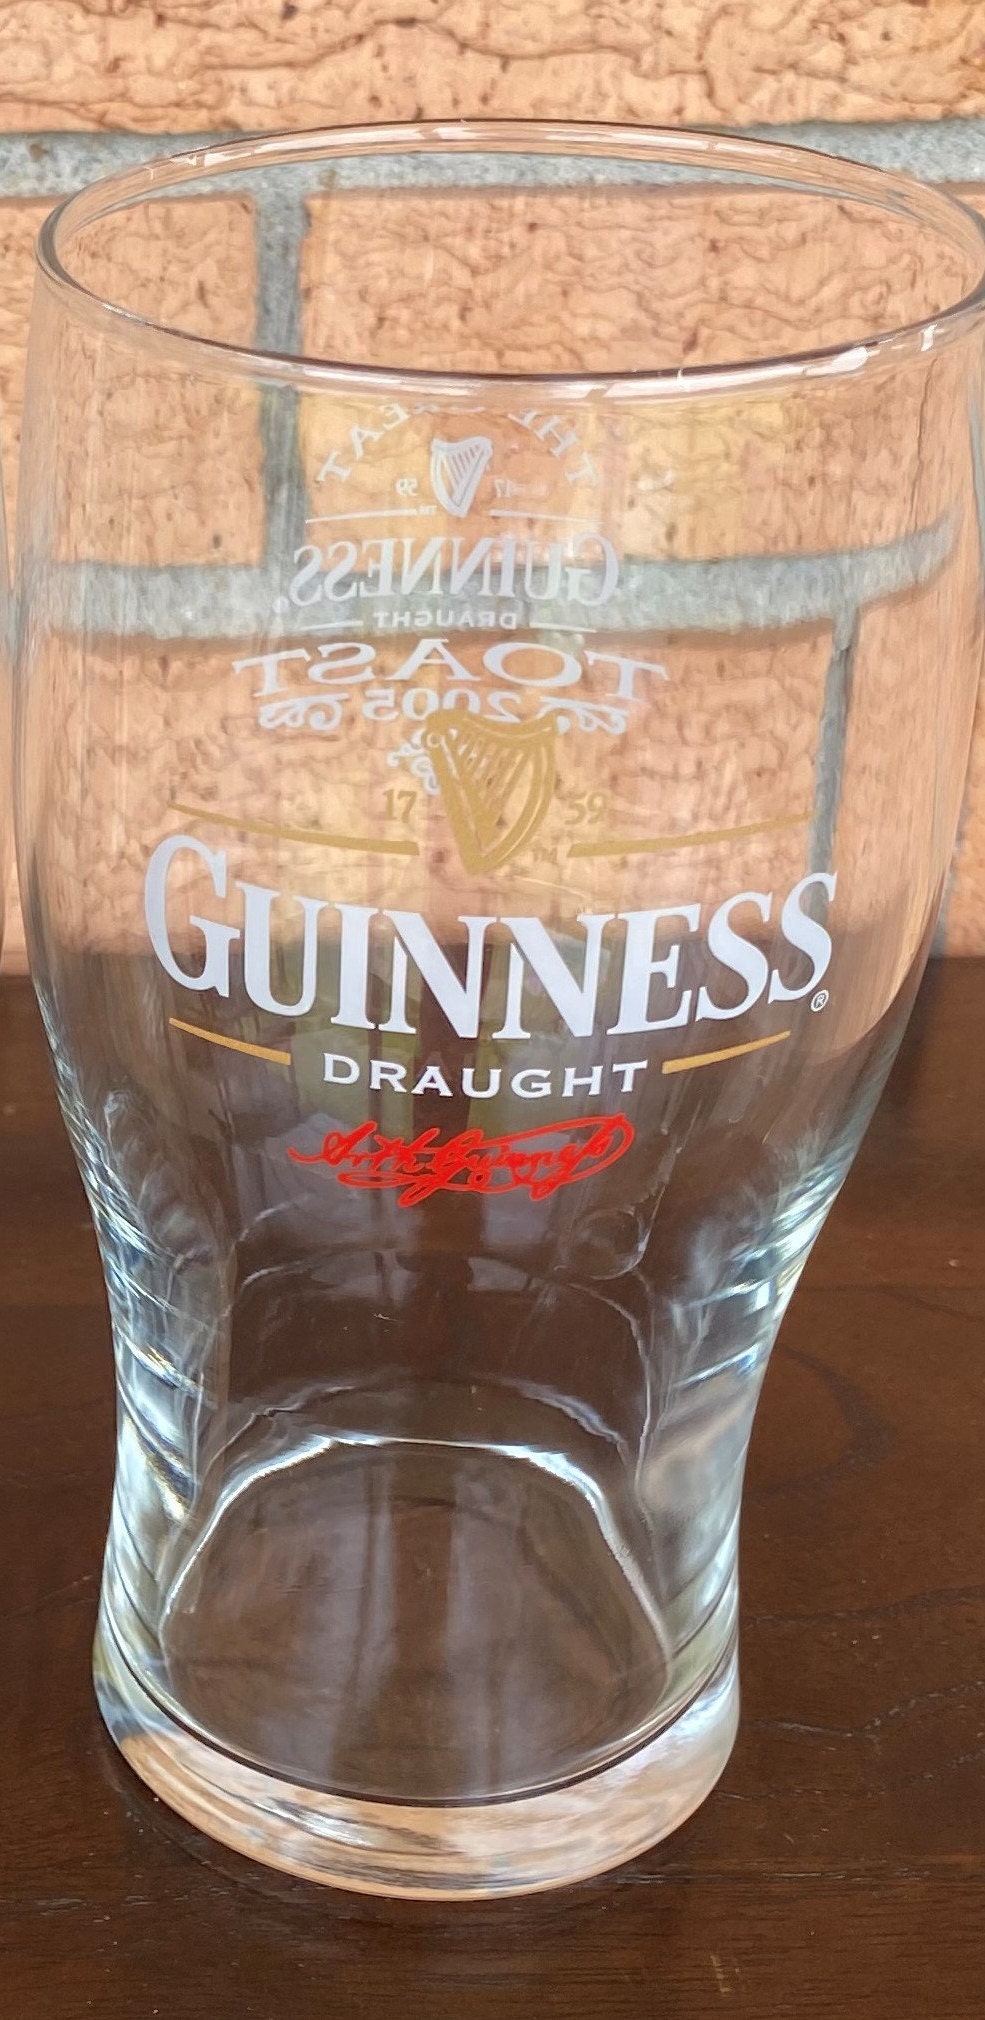 Set Of 4 20oz Guinness Tulip Pint Glasses Pub Draught